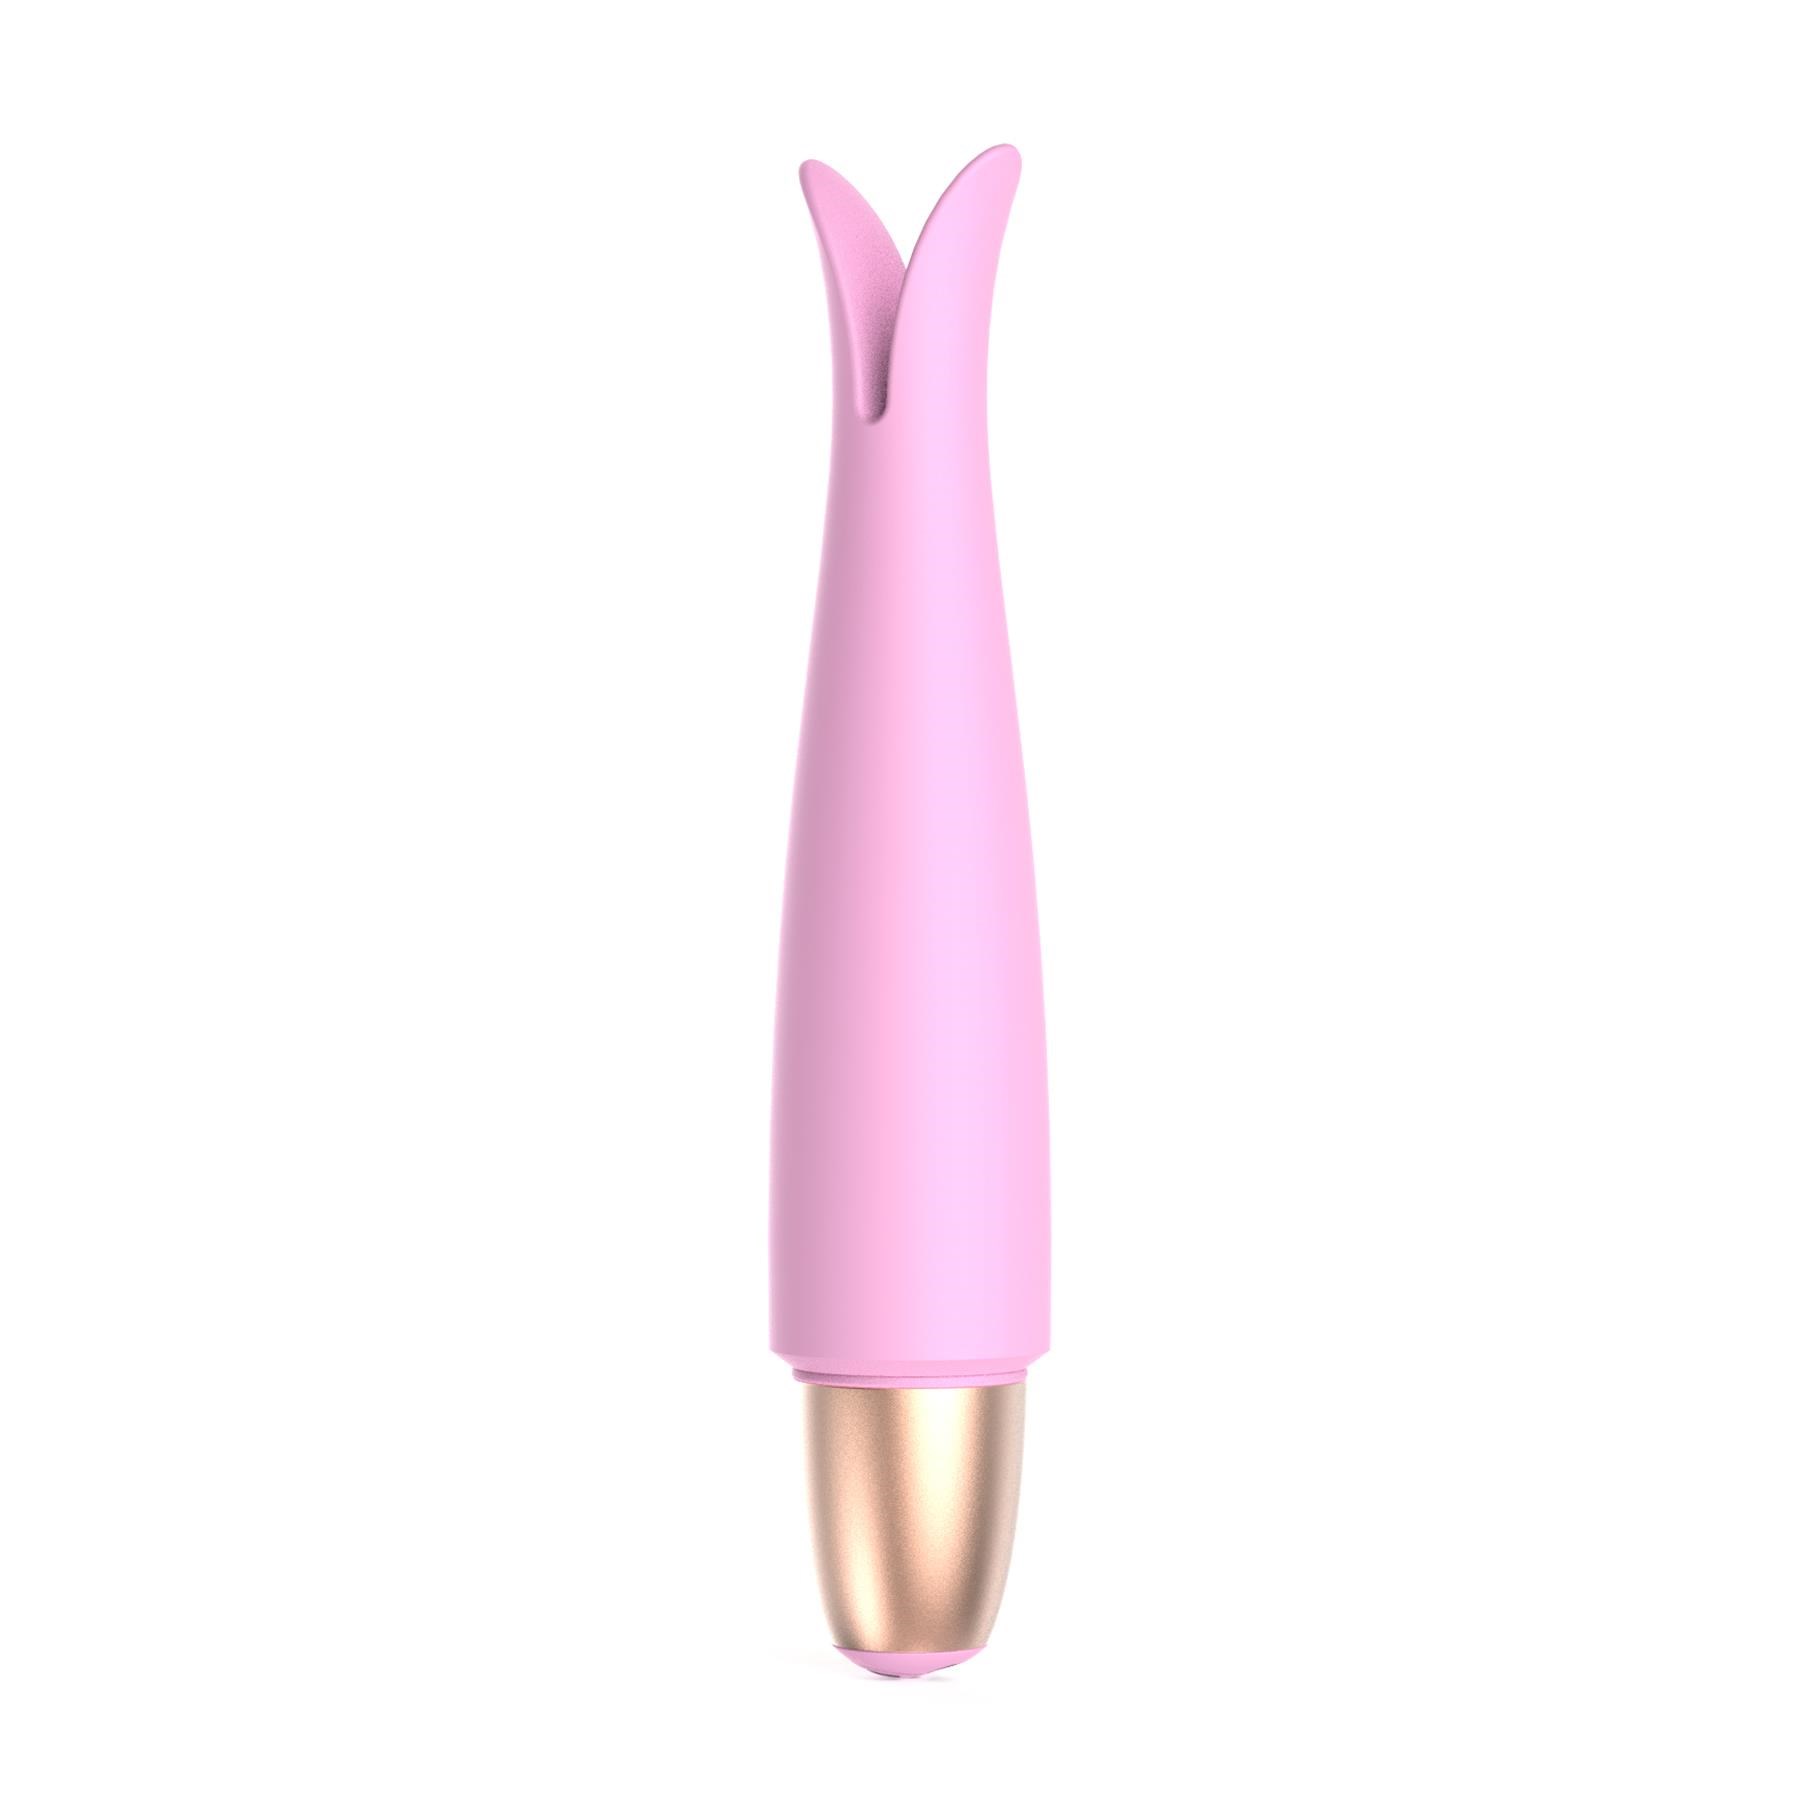 Adam & Eve Playful Seduction Sex Toy Kit - Tulip Sleeve on Bullet